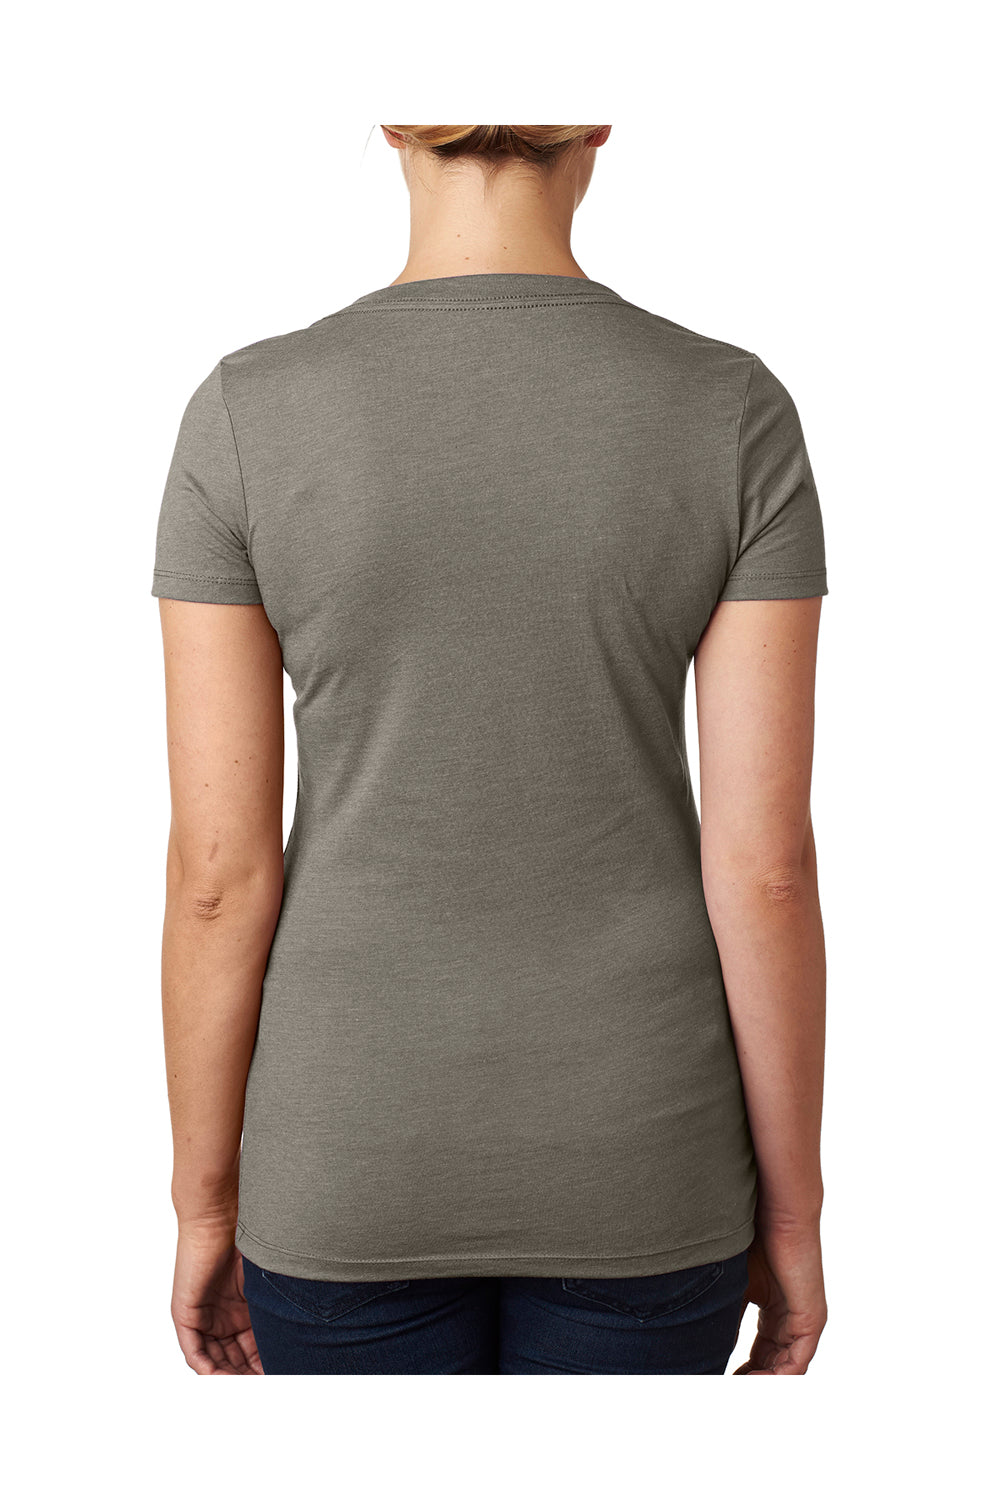 Next Level 6640 Womens CVC Jersey Short Sleeve V-Neck T-Shirt Warm Grey Back